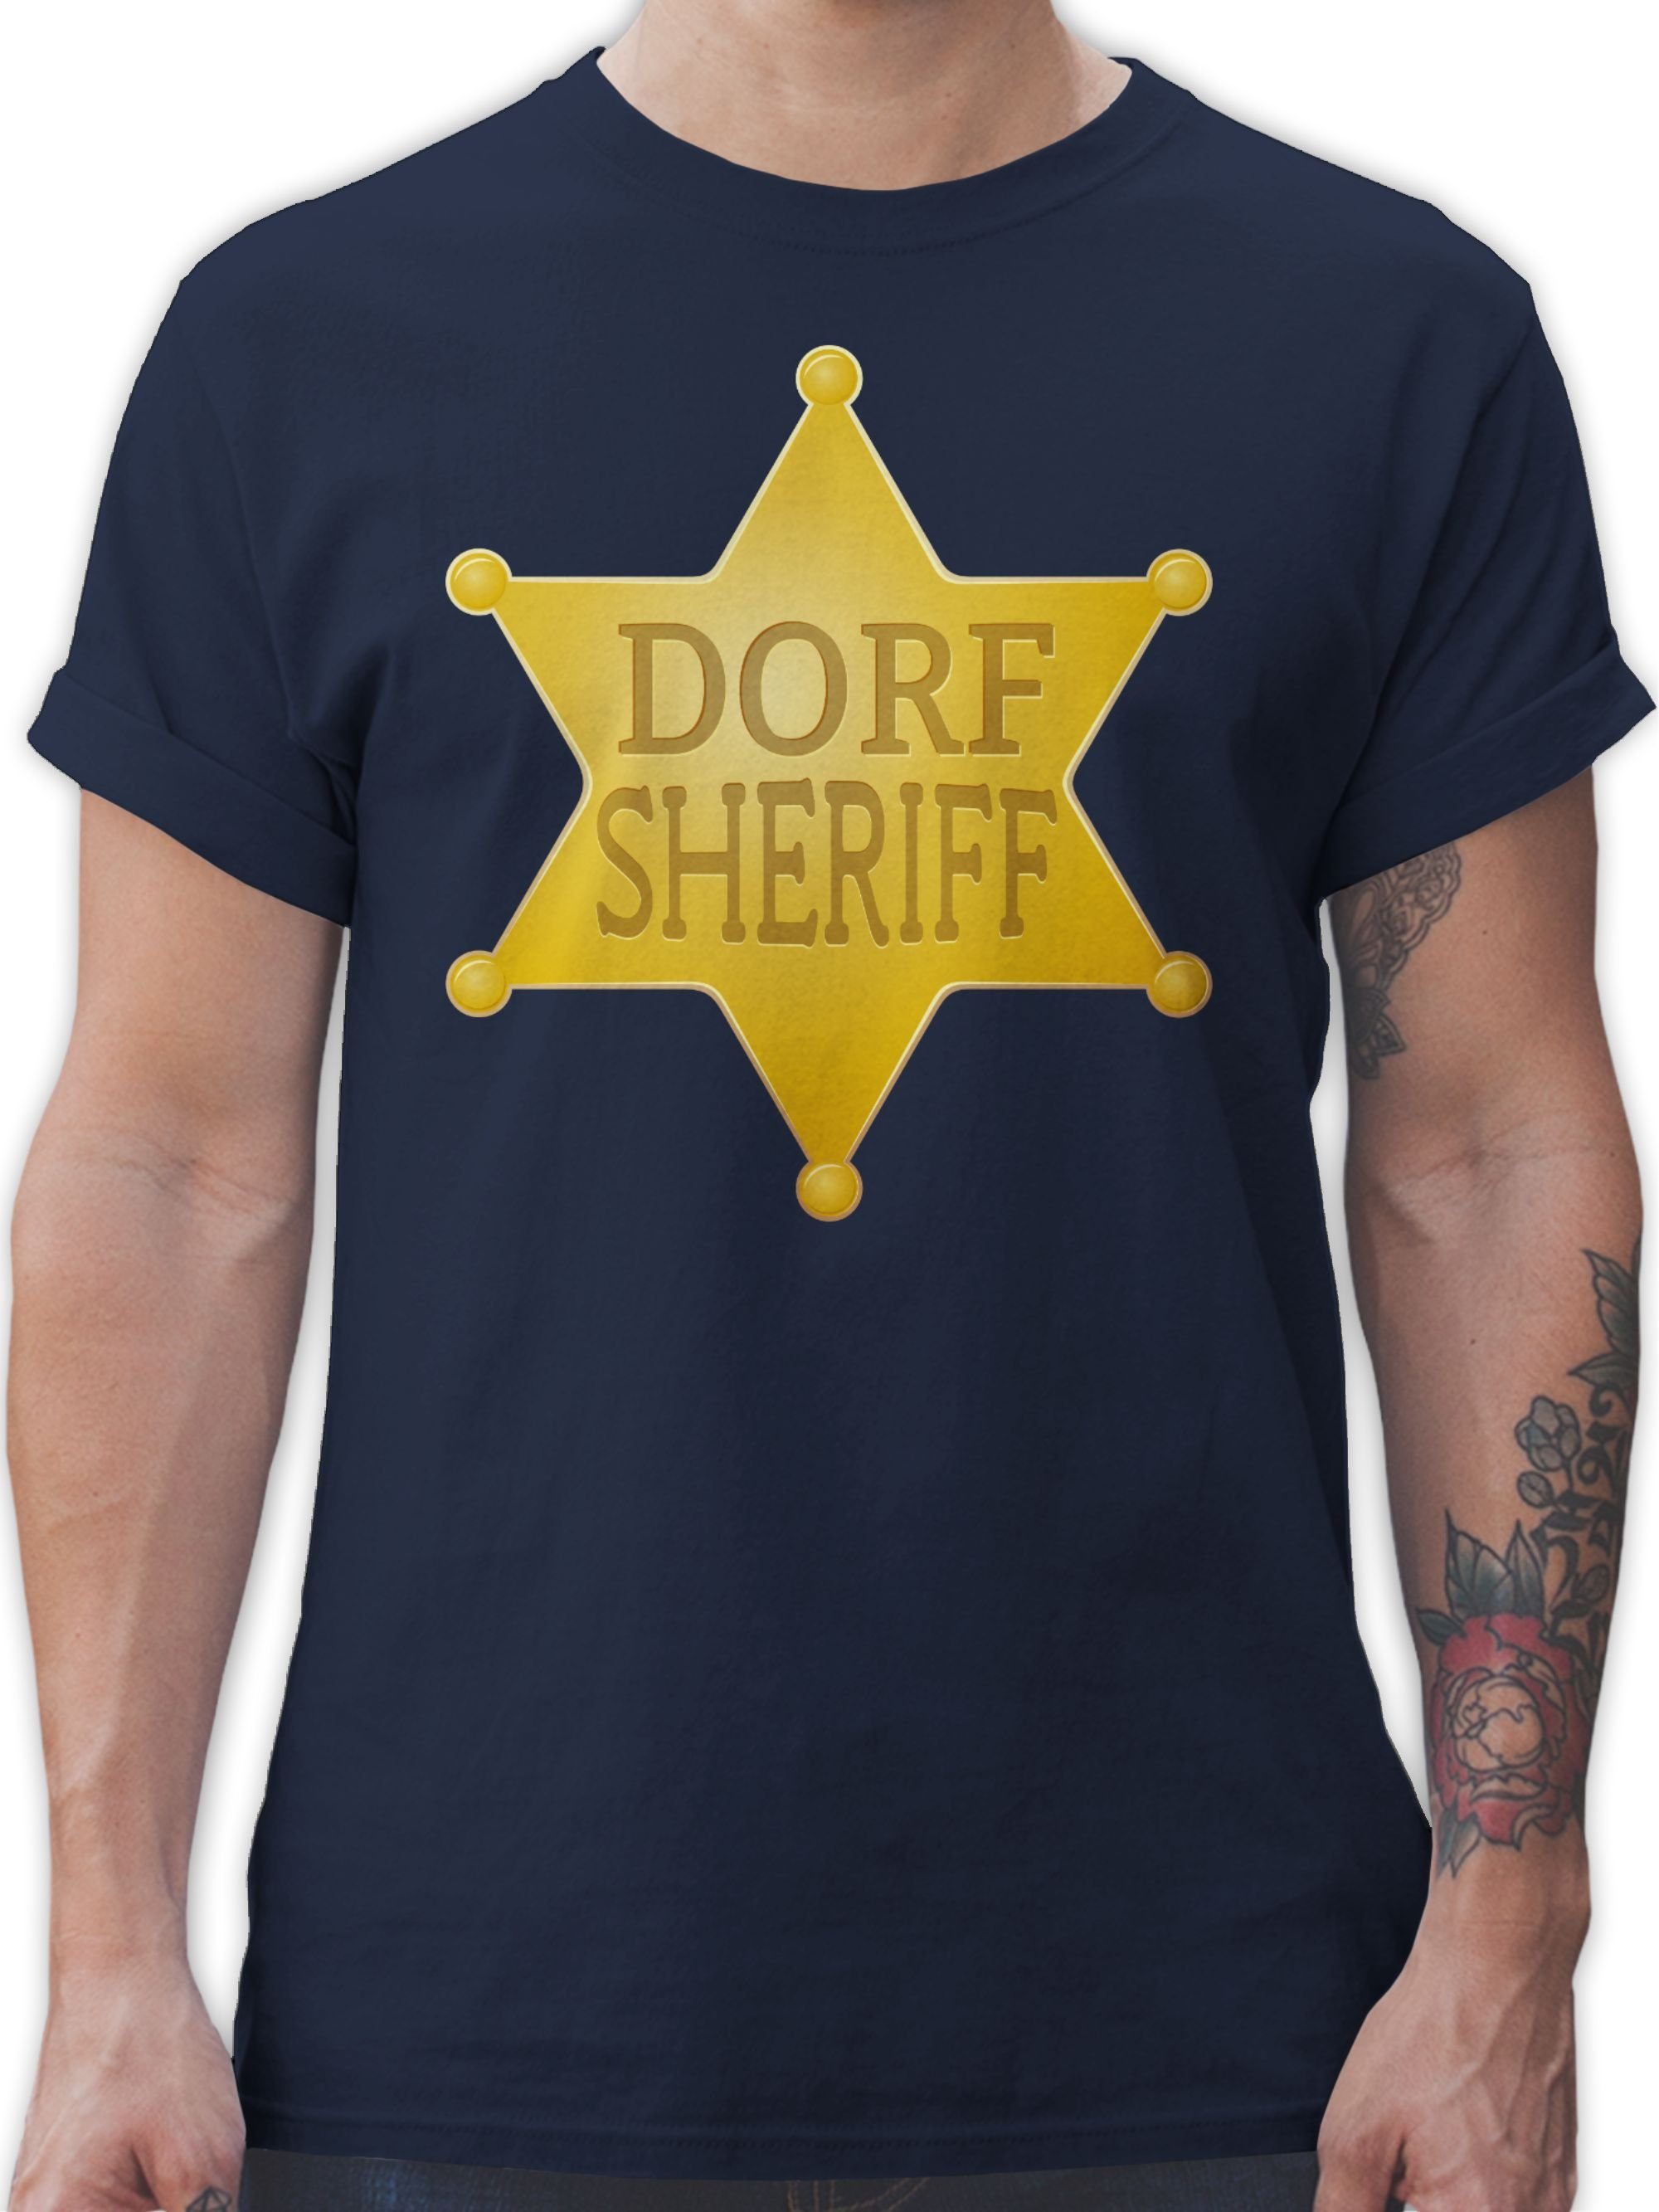 Shirtracer T-Shirt Dorf Sheriff goldener Stern Karneval Outfit 2 Navy Blau | T-Shirts